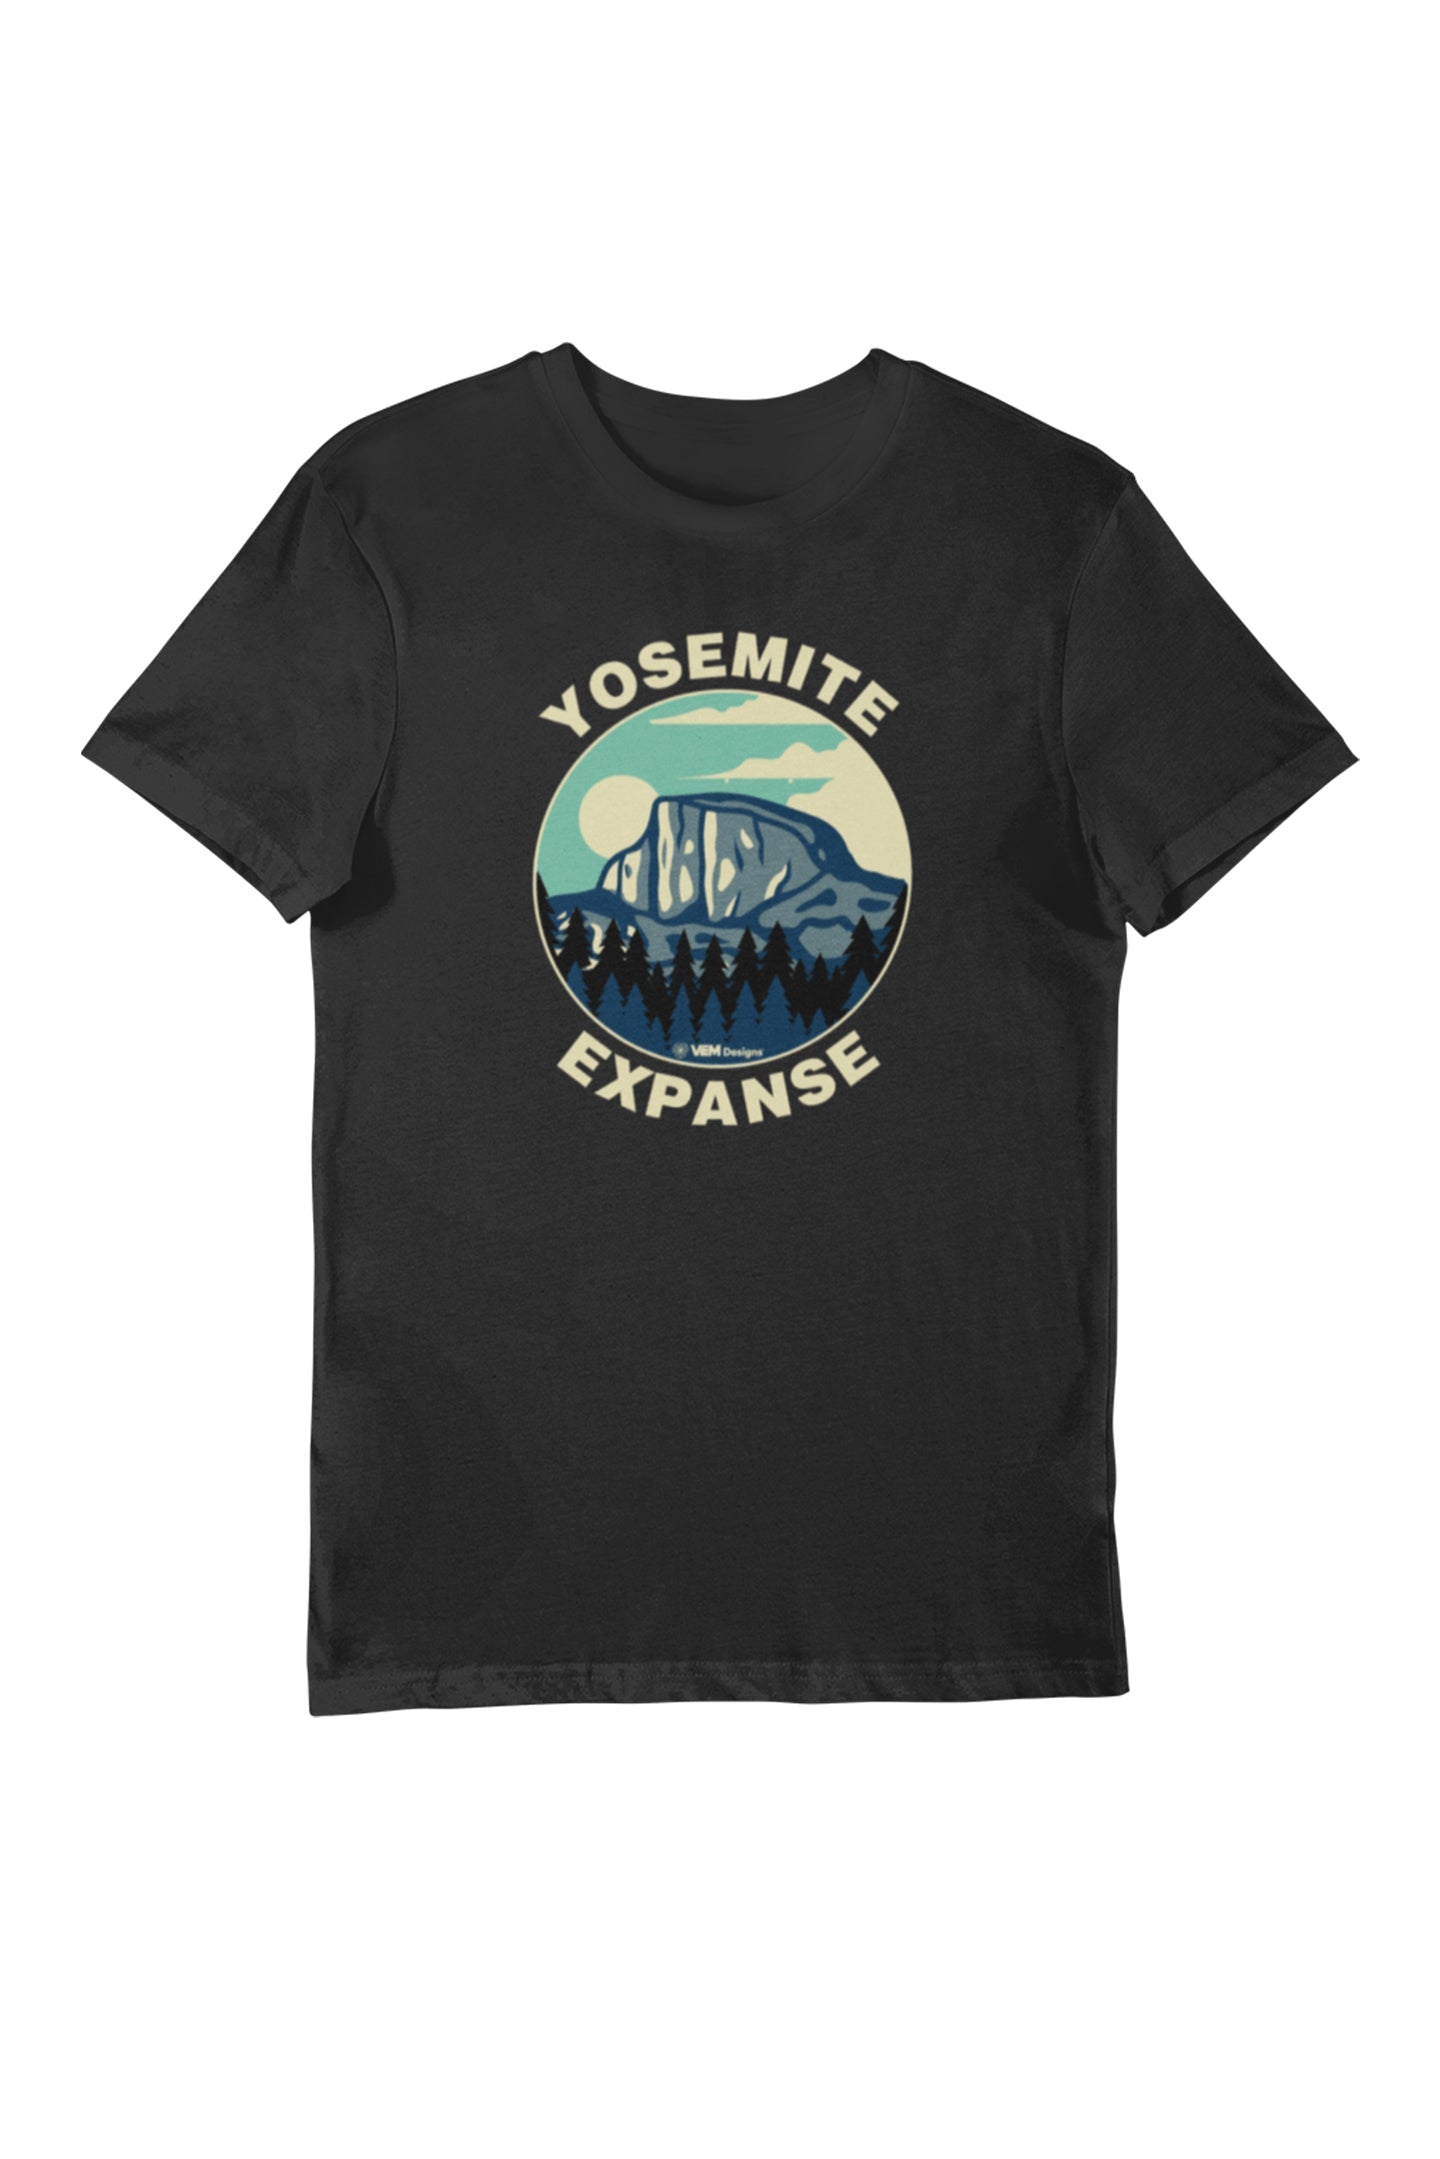 Yosemite - Men's